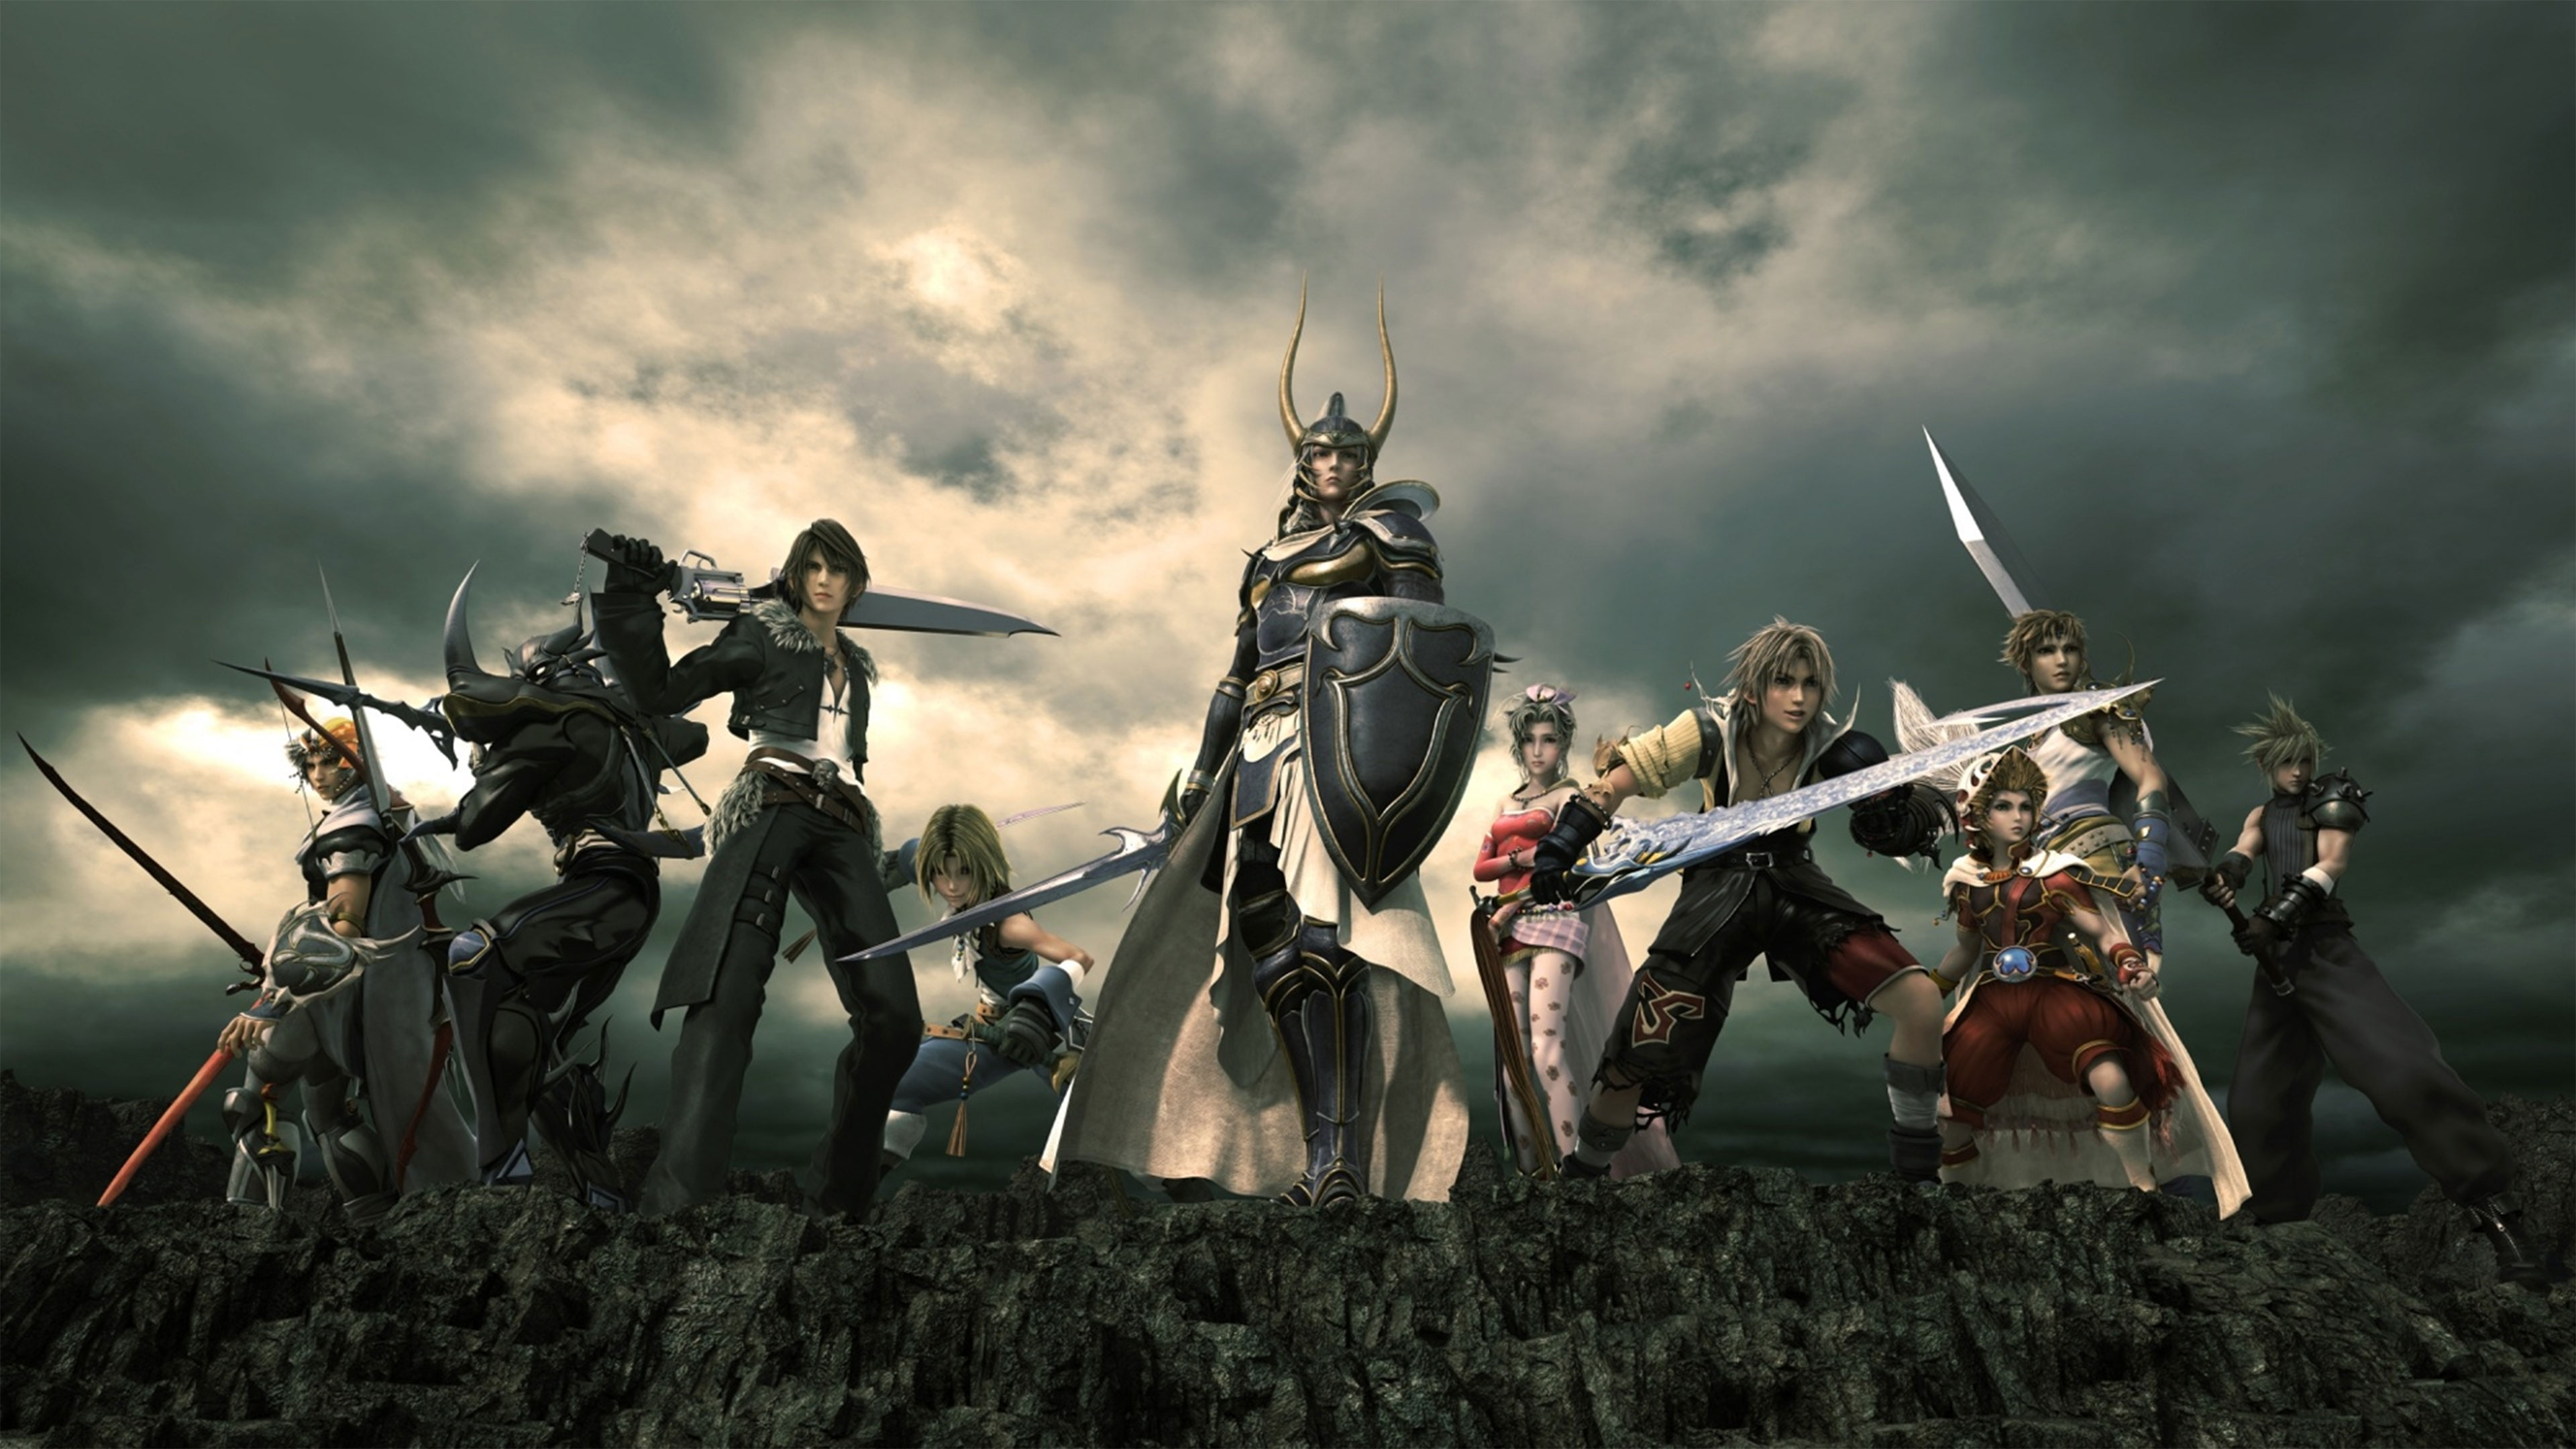 Final Fantasy XV Wallpapers in Ultra HD | 4K - Gameranx